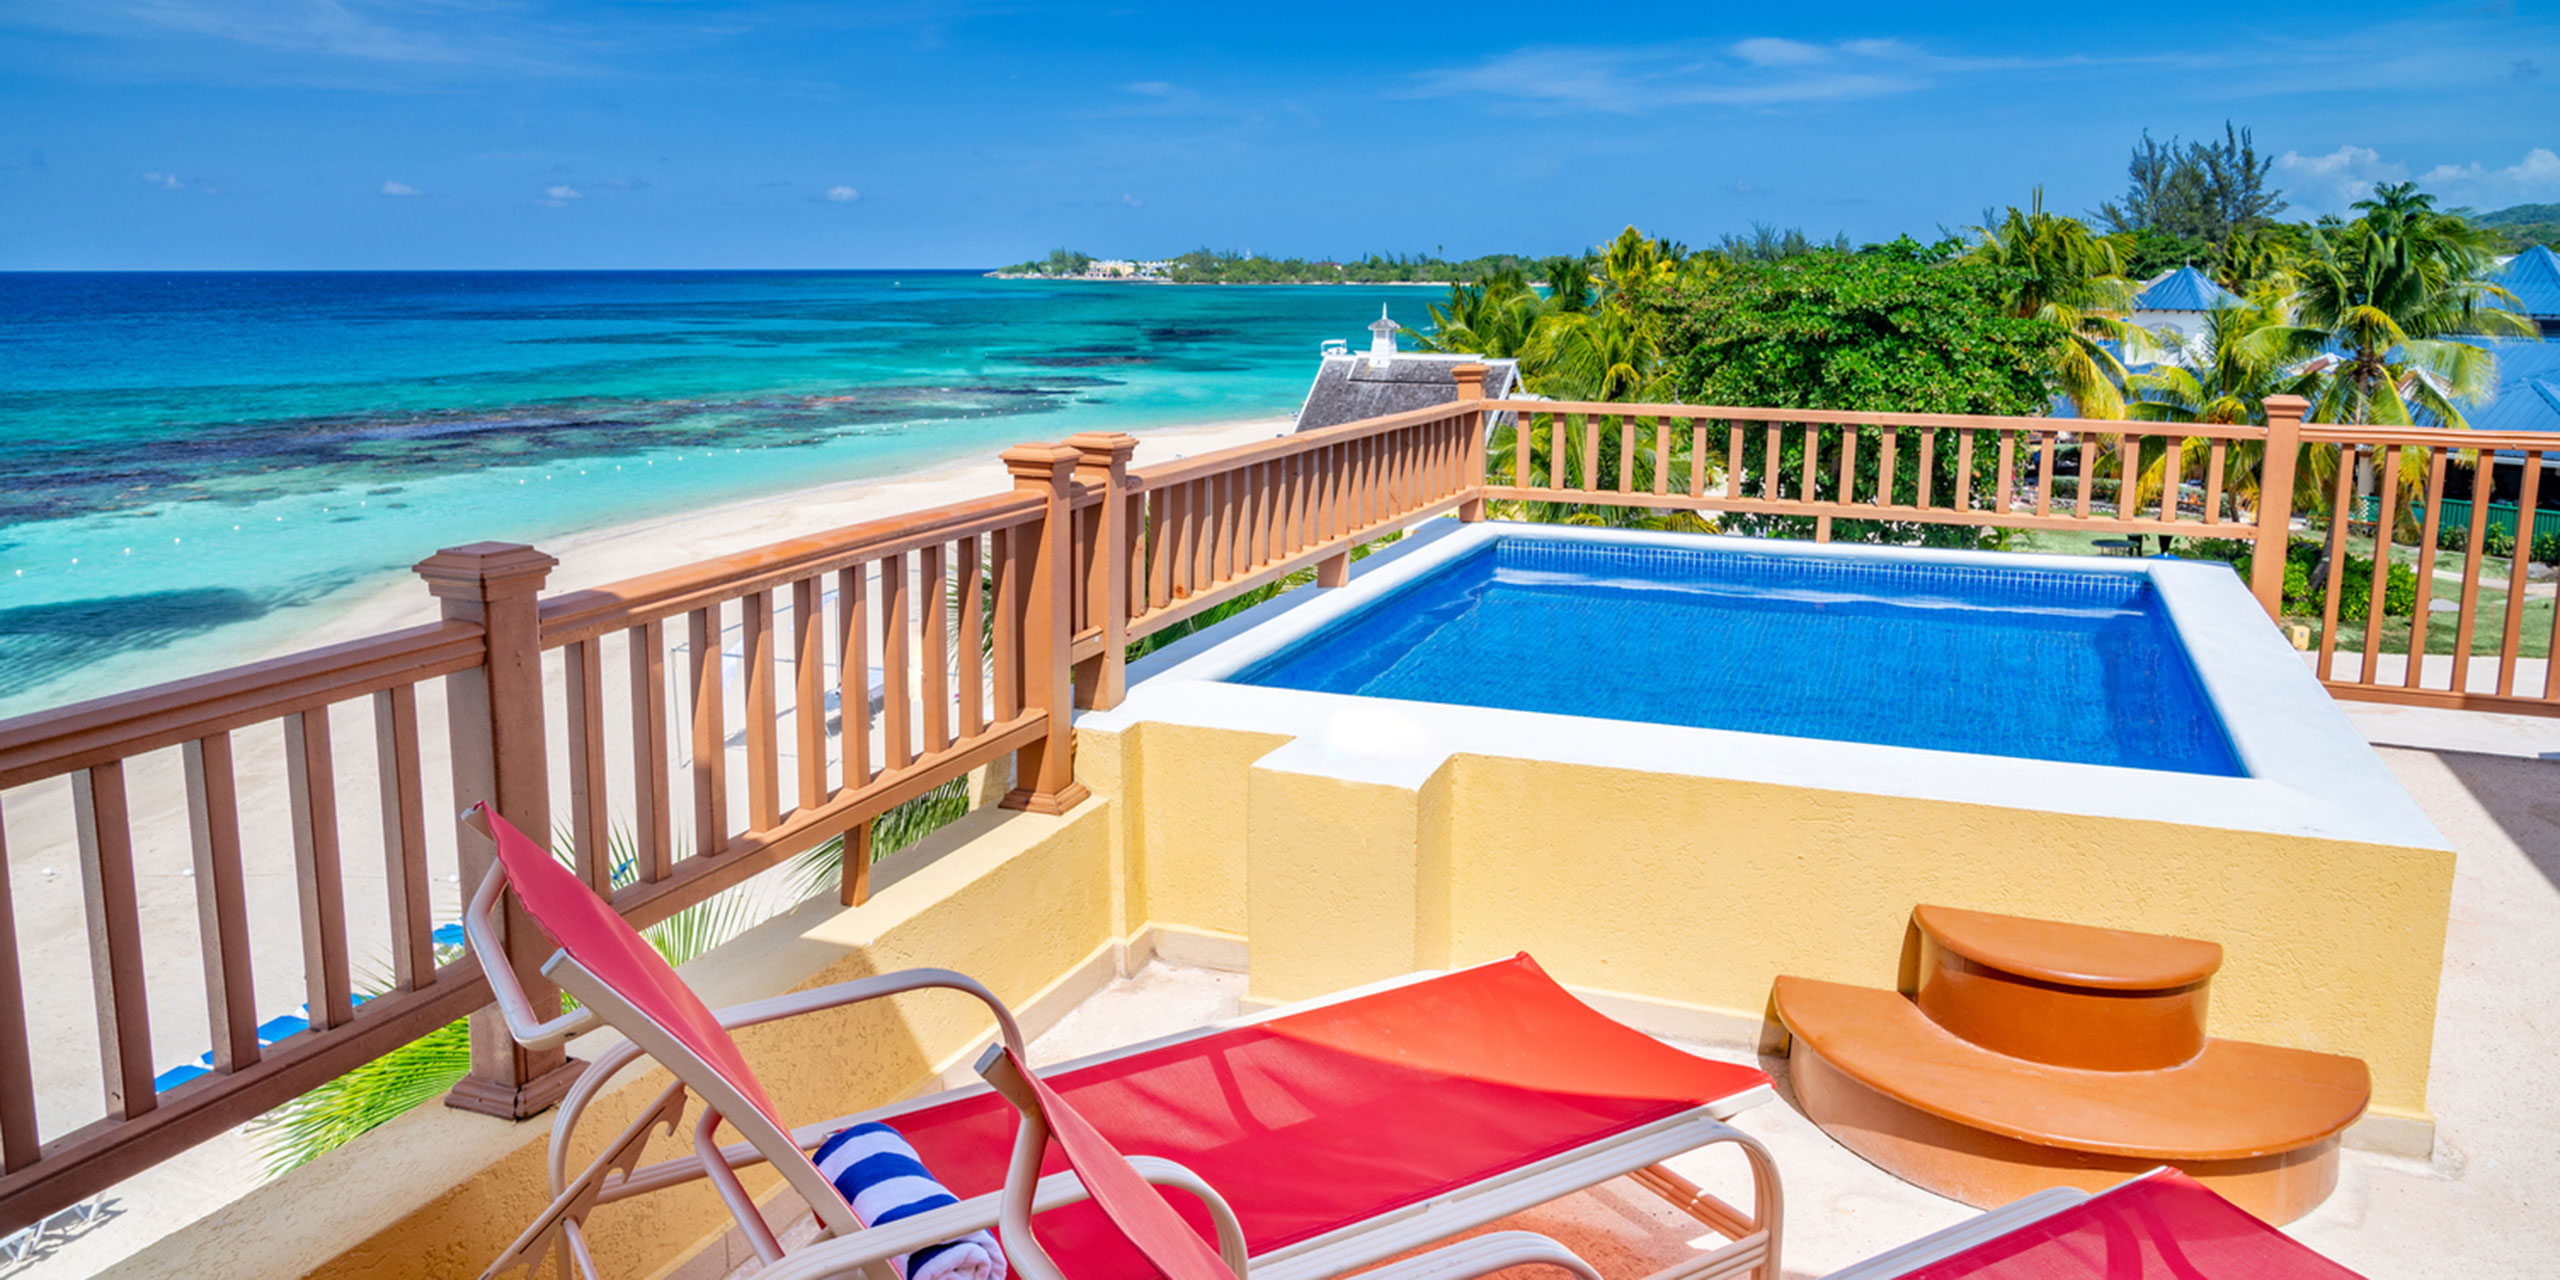 Jewel Runaway Bay Beach Resort & Spa in Jamaica